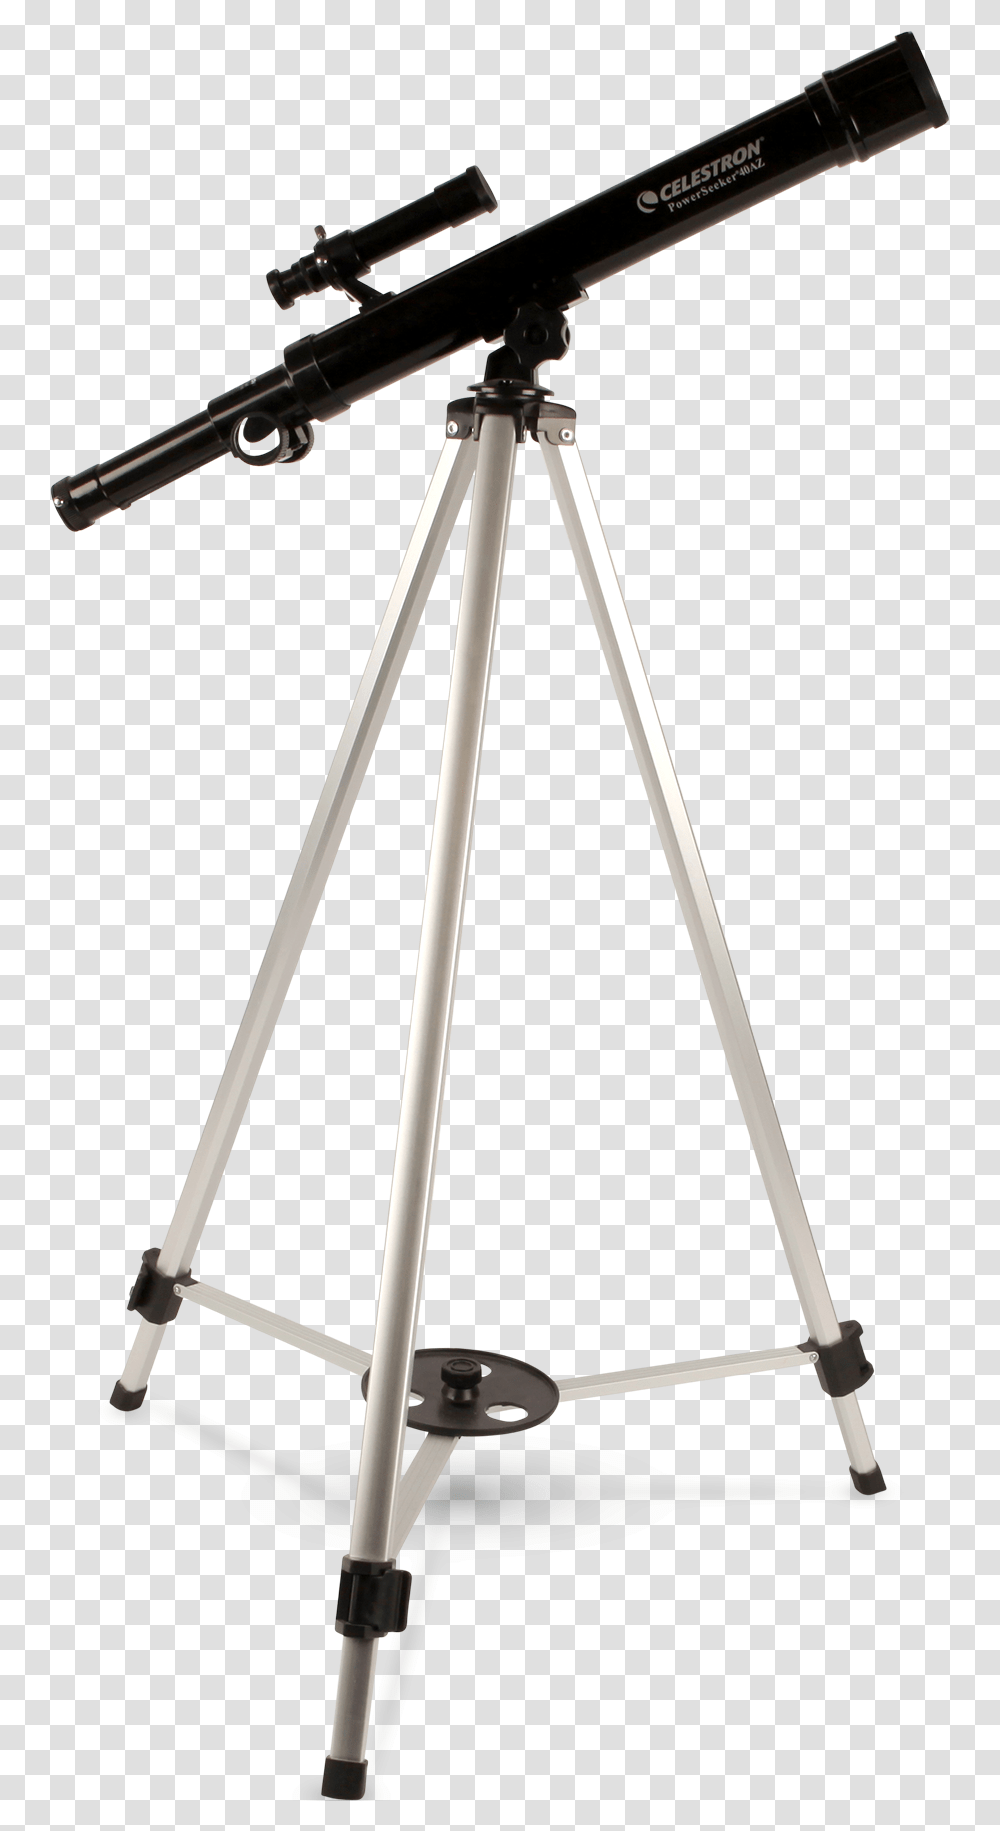 Celestron Powerseeker 40mm Telescope Unboxed Telescope On Stand, Tripod, Bow, Utility Pole, Shop Transparent Png